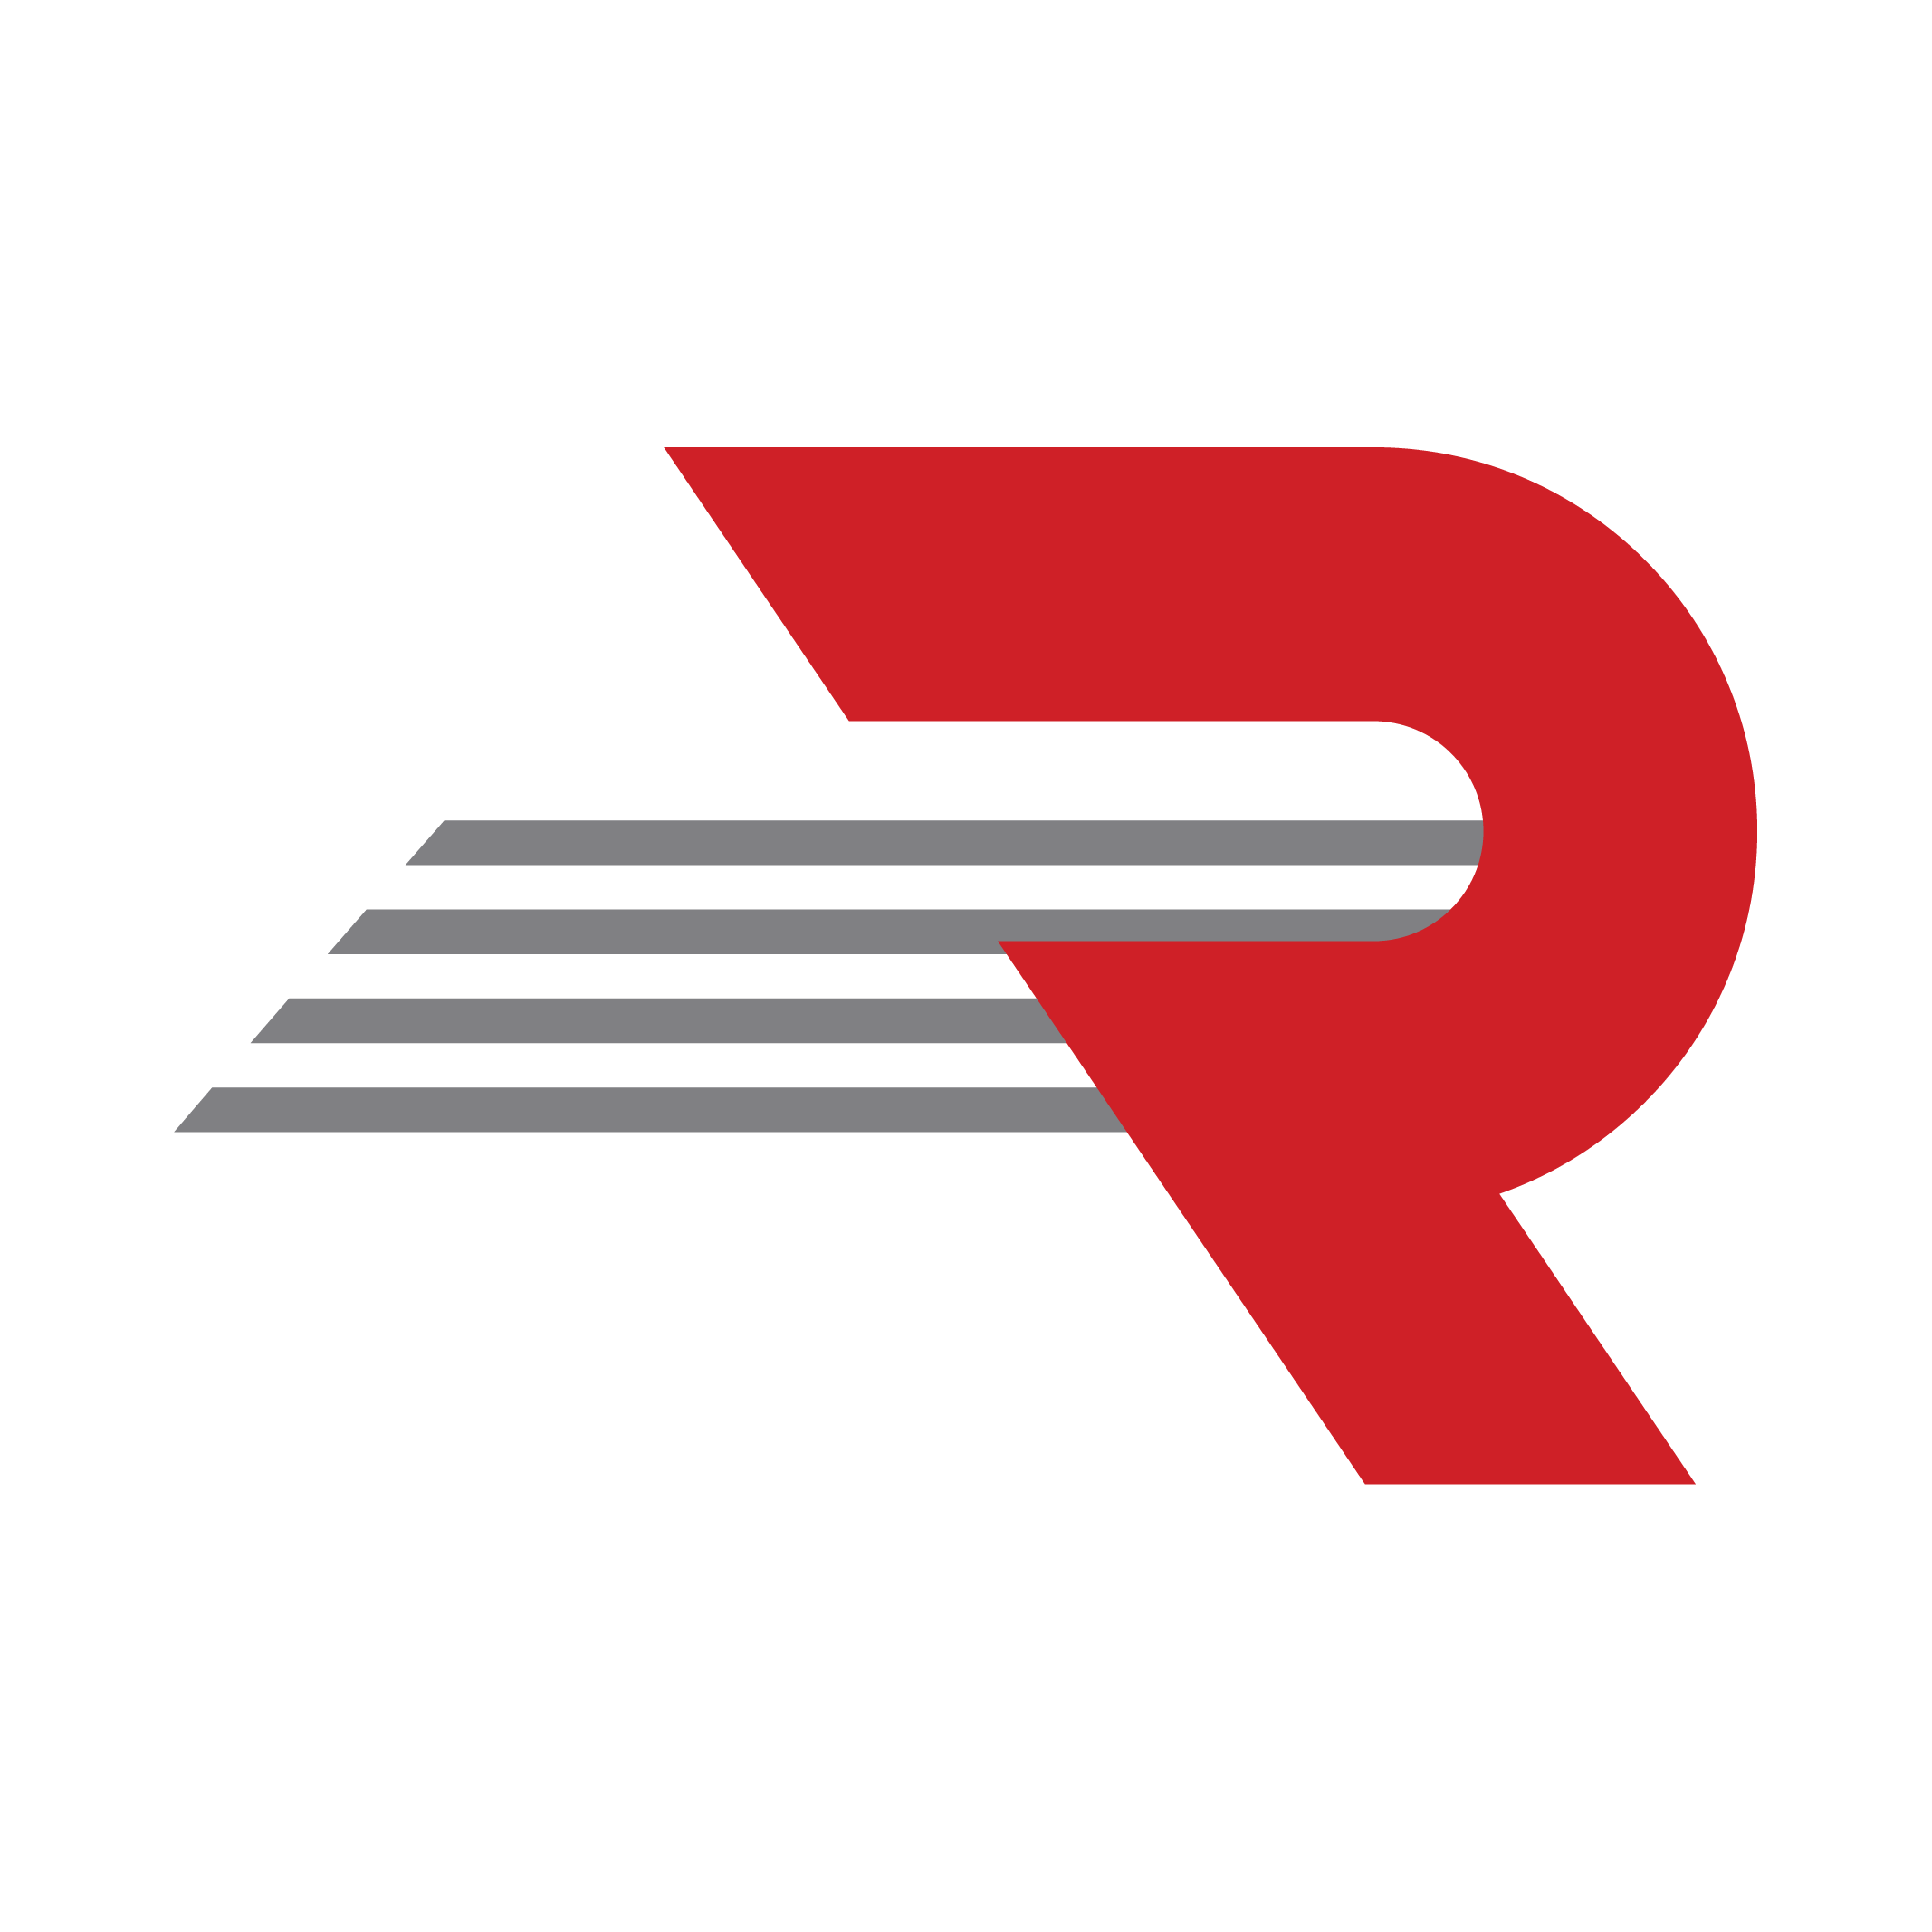 Red and grey Ravine "R" logo